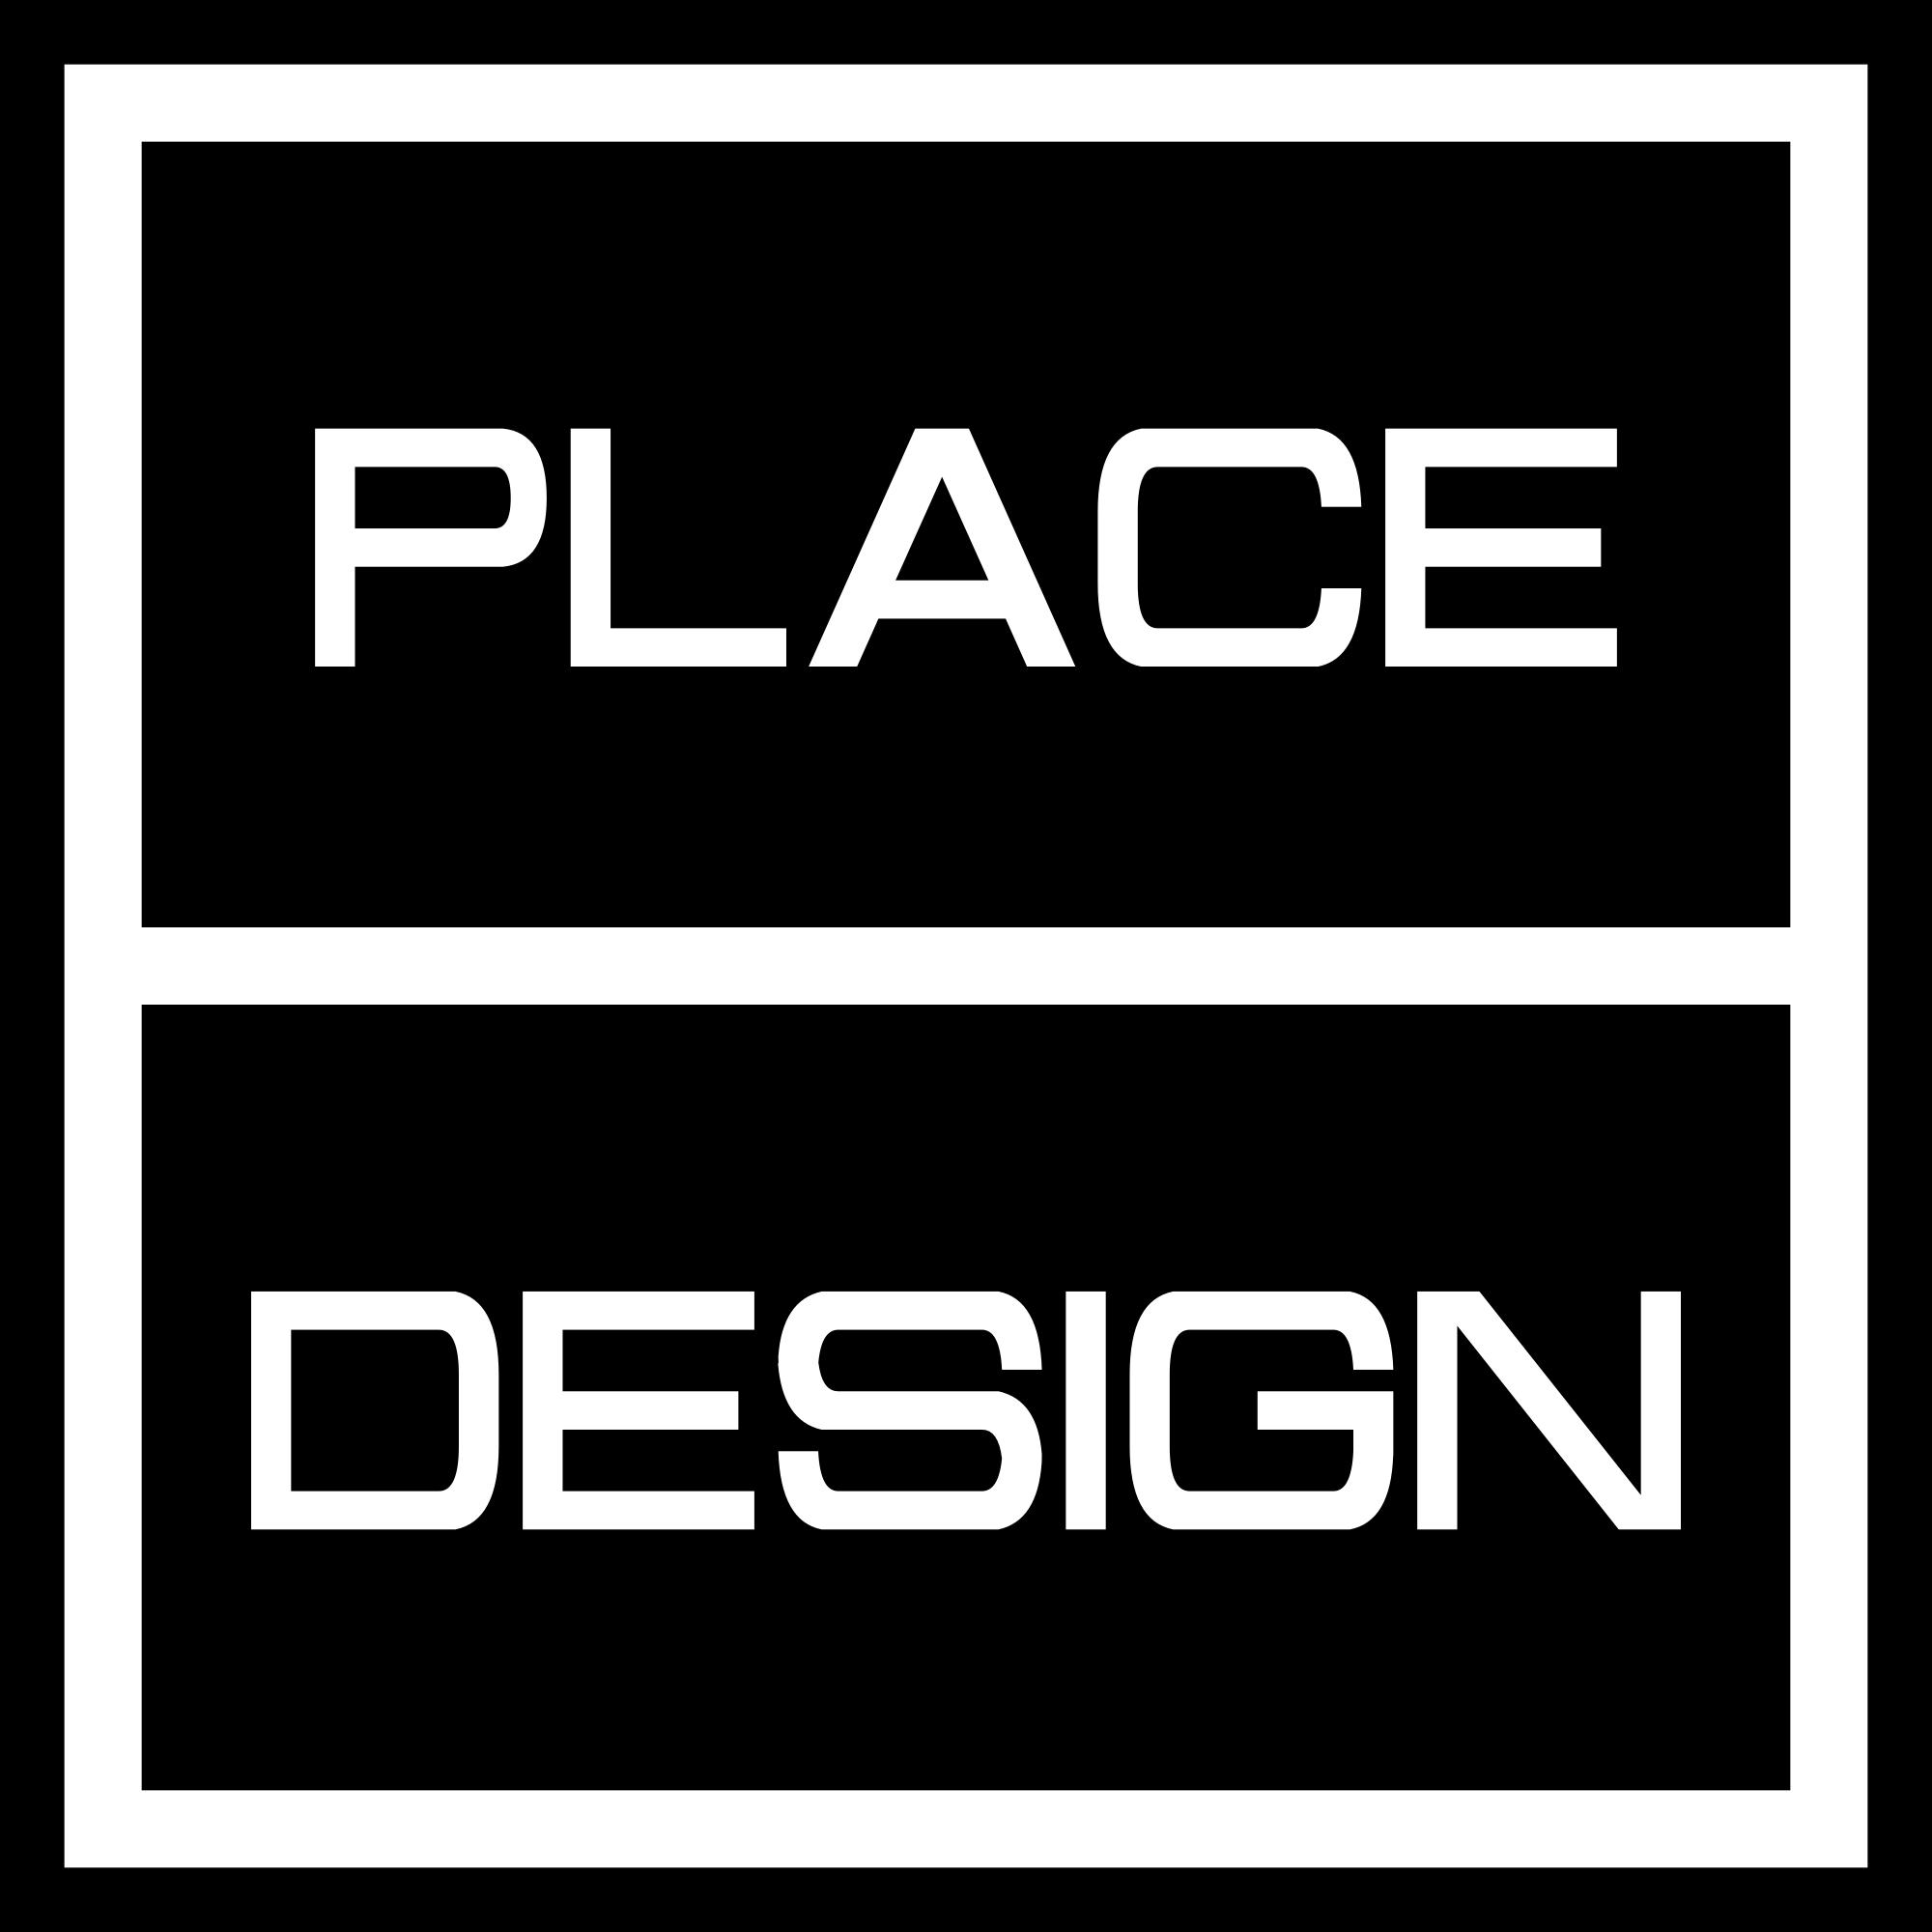 Place Design logo